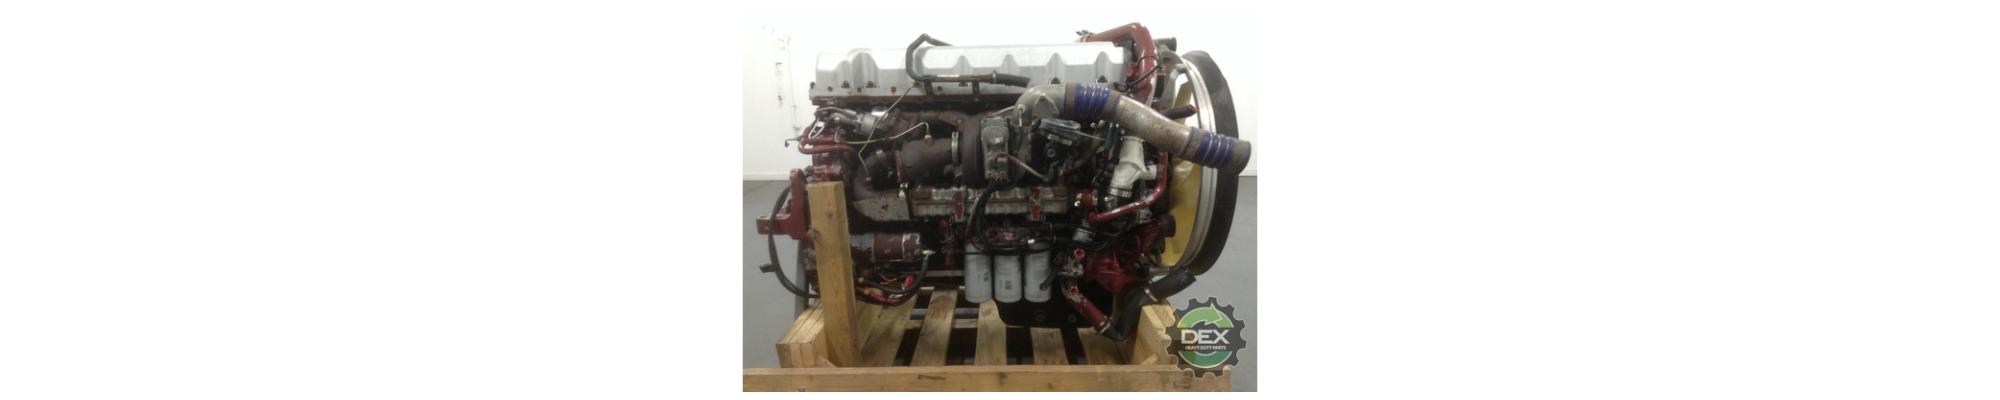 Mack Mp8 Engine Parts Diagram - Wiring Diagram Schemas